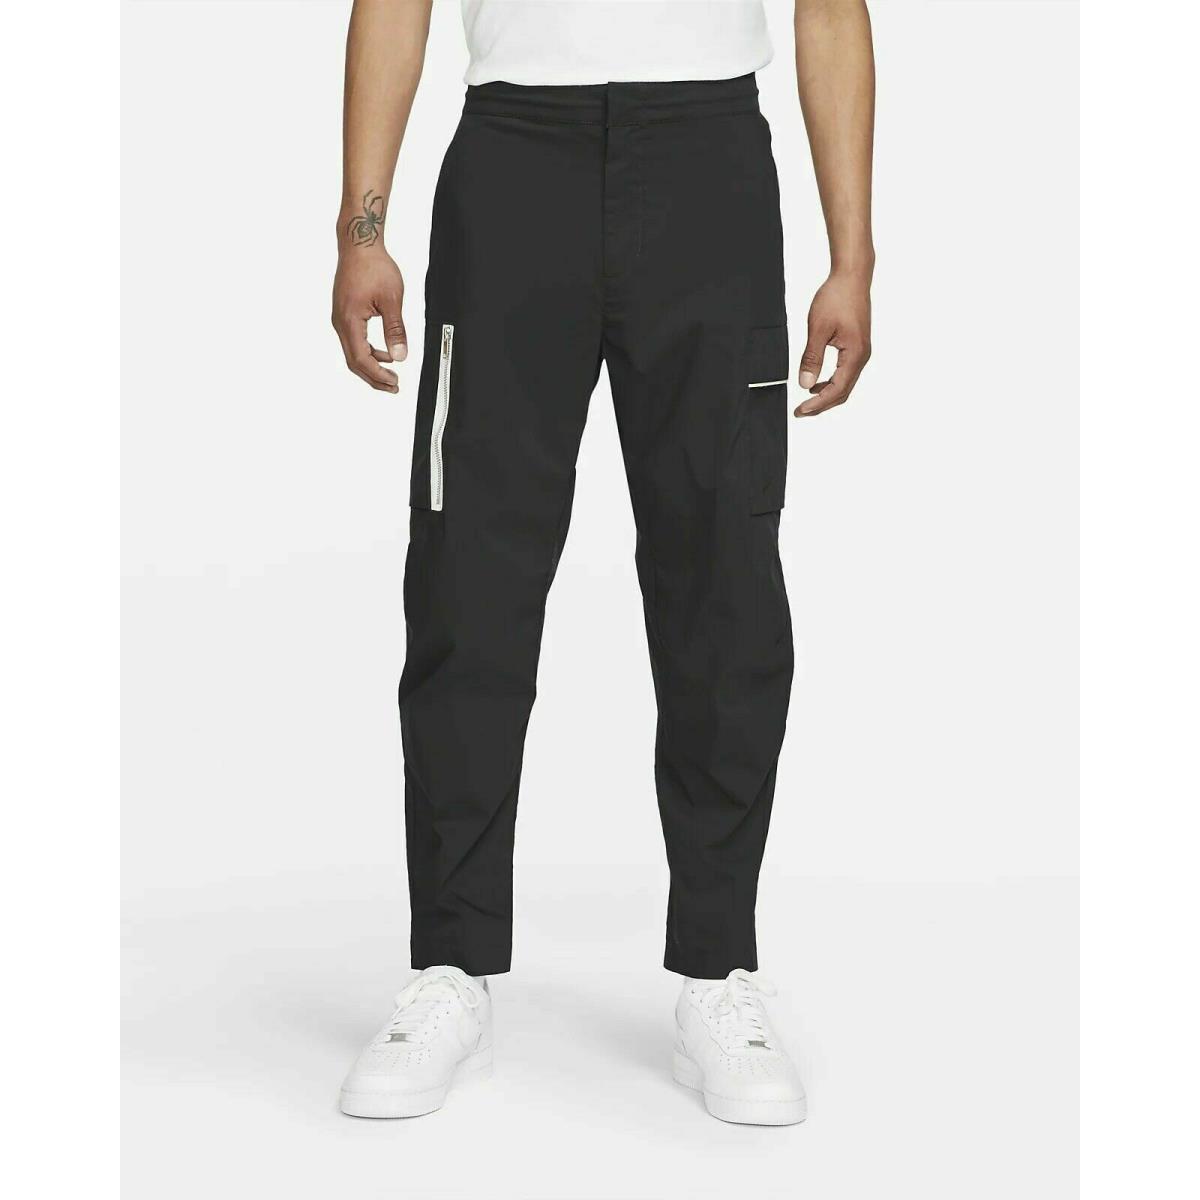 Nike Nsw Essential Style Woven Utility Pants Size 34 Black White DD7034-010